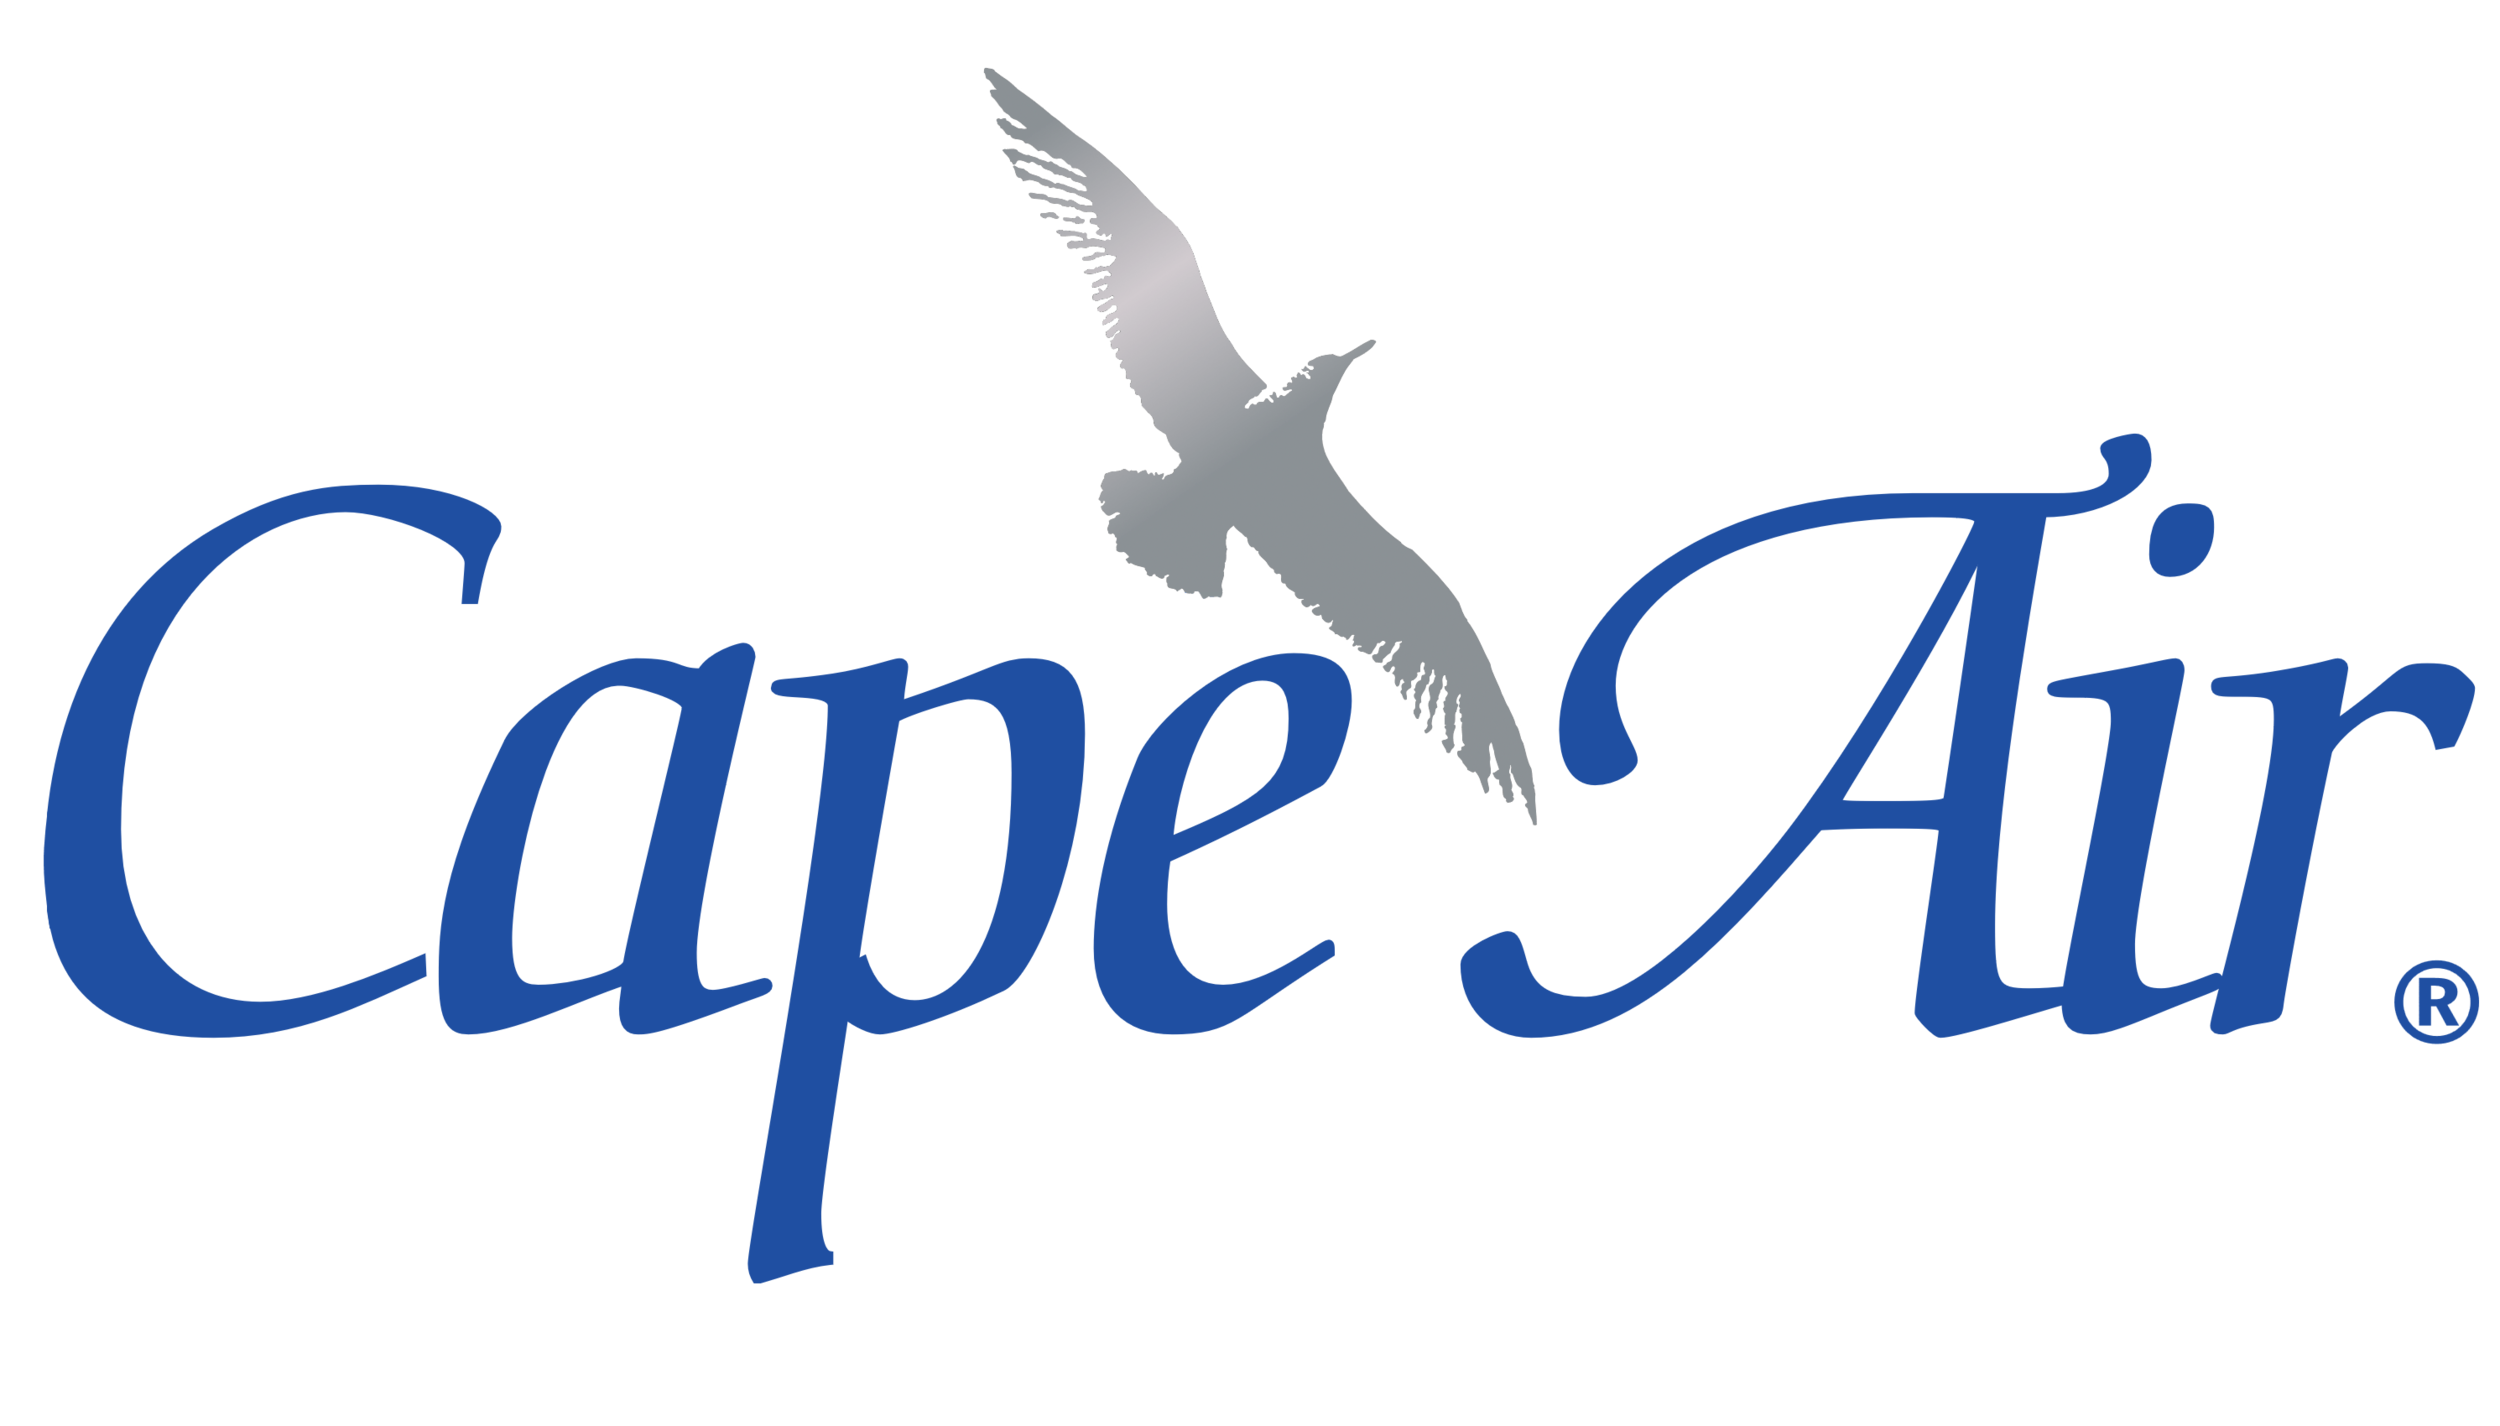 Cape_Air_logo.png